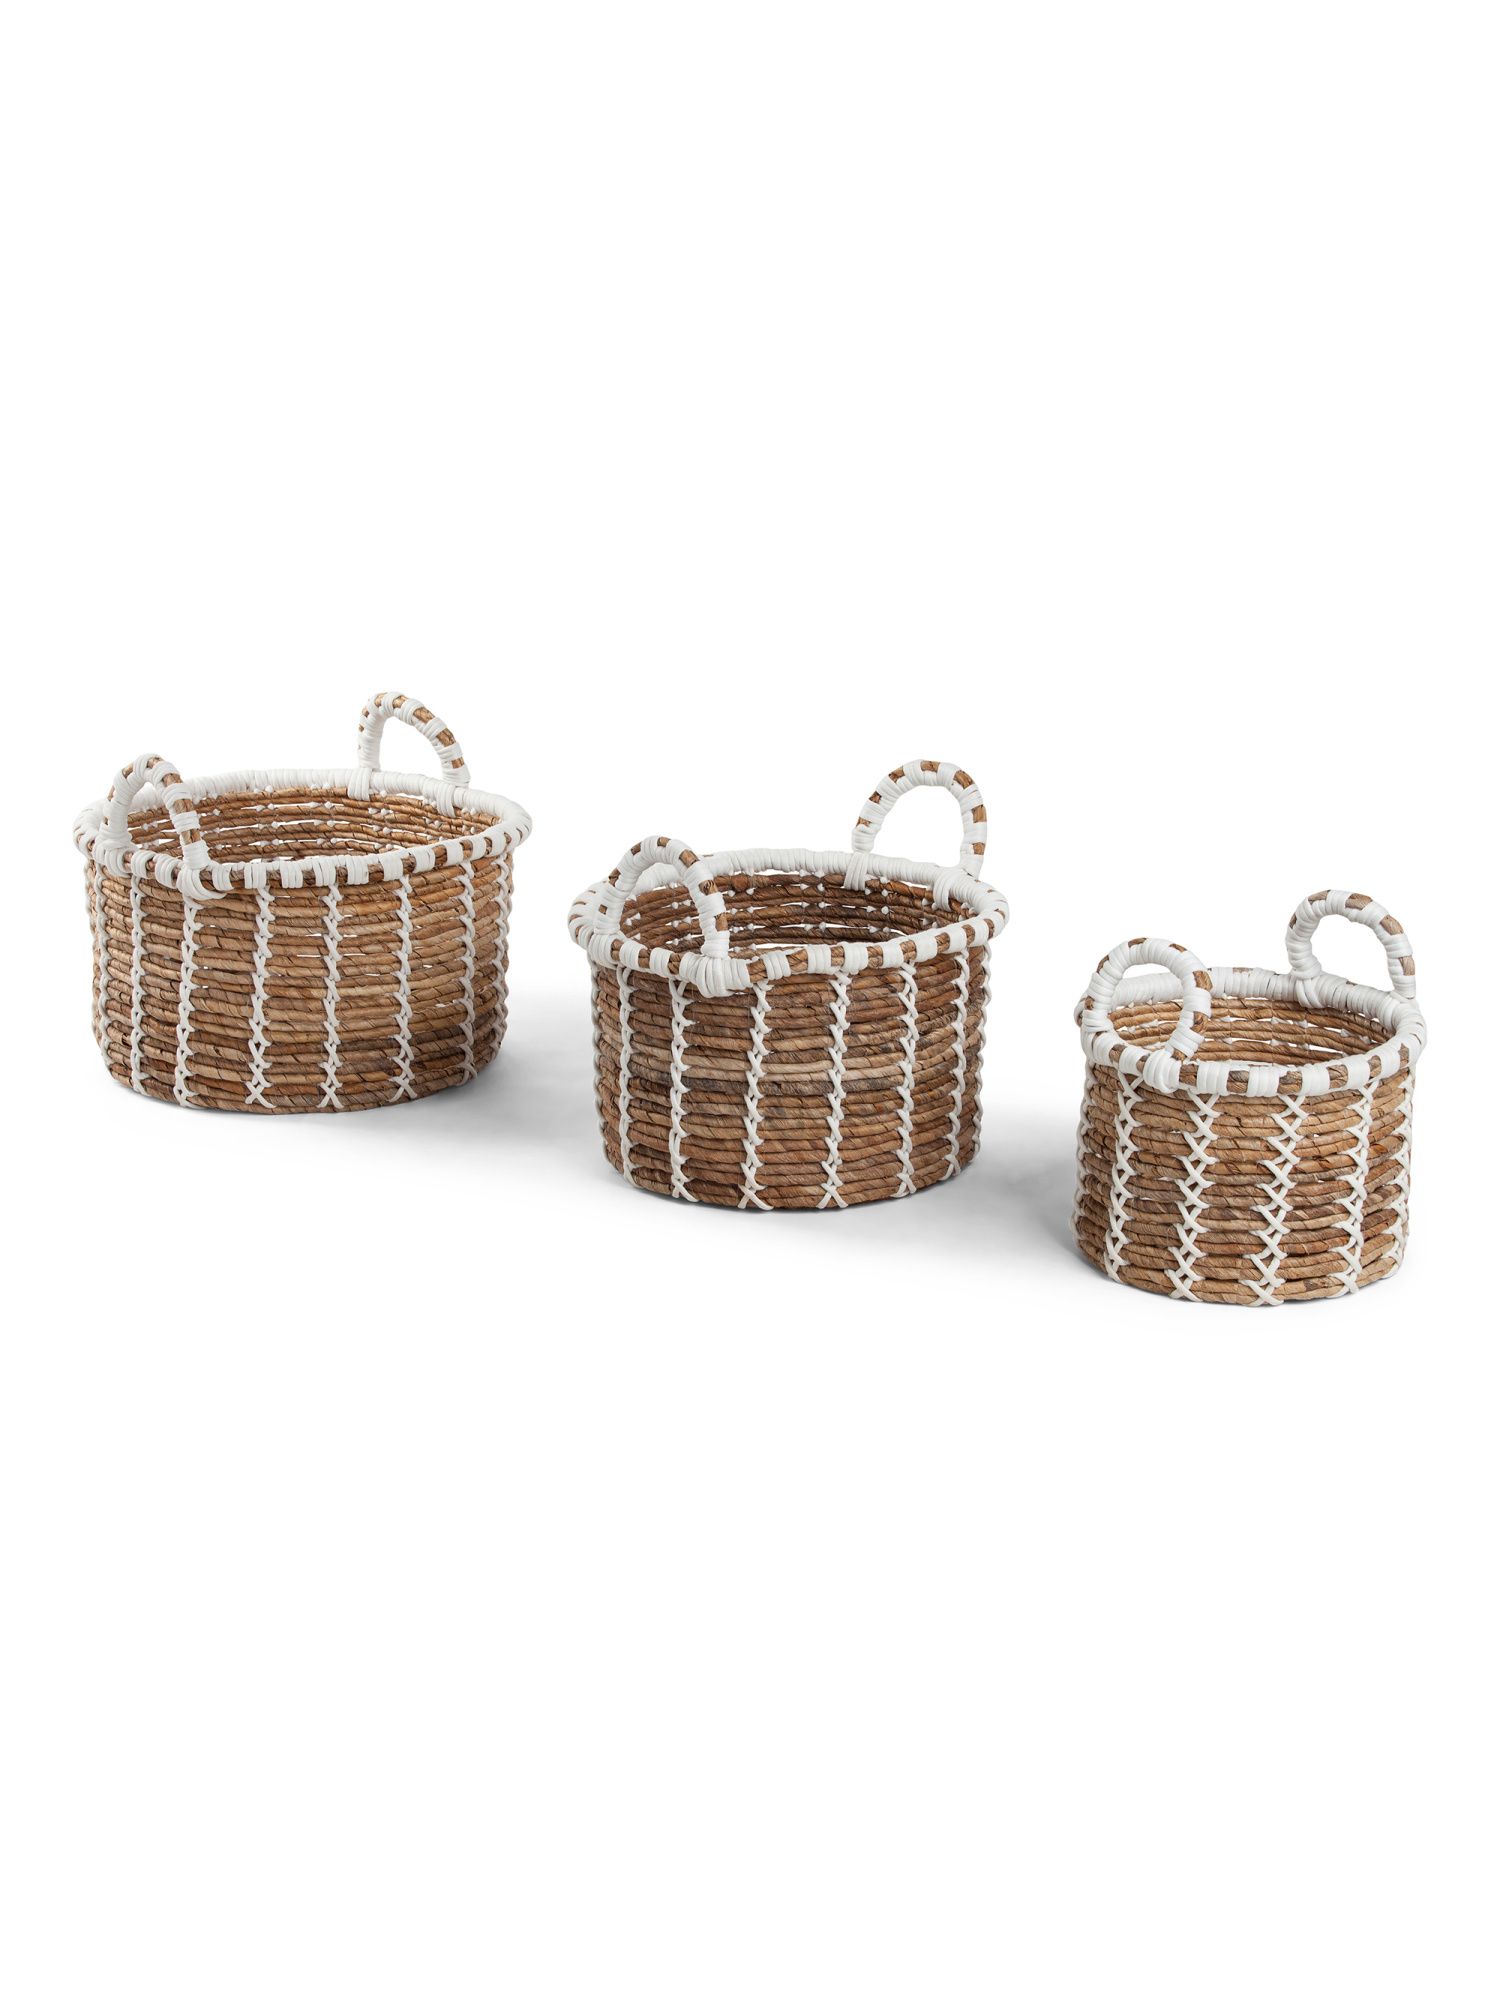 Banana Cotton Belly Basket Collection | Office & Storage | Marshalls | Marshalls